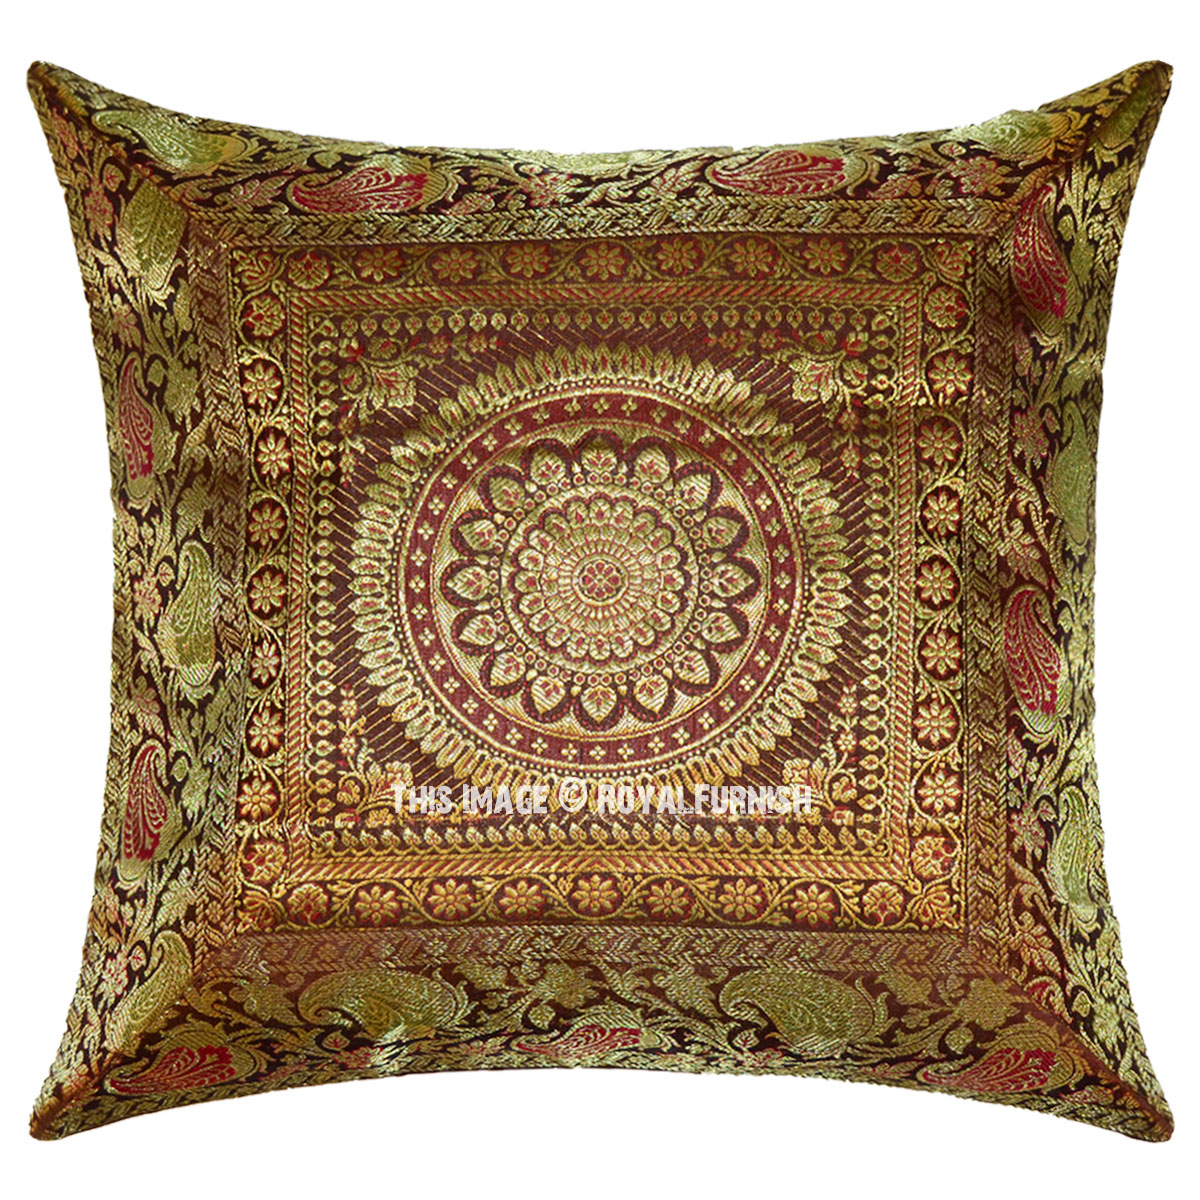 16X16 Inch Decorative Mandala Brown Silk Brocade Throw Pillow Cover